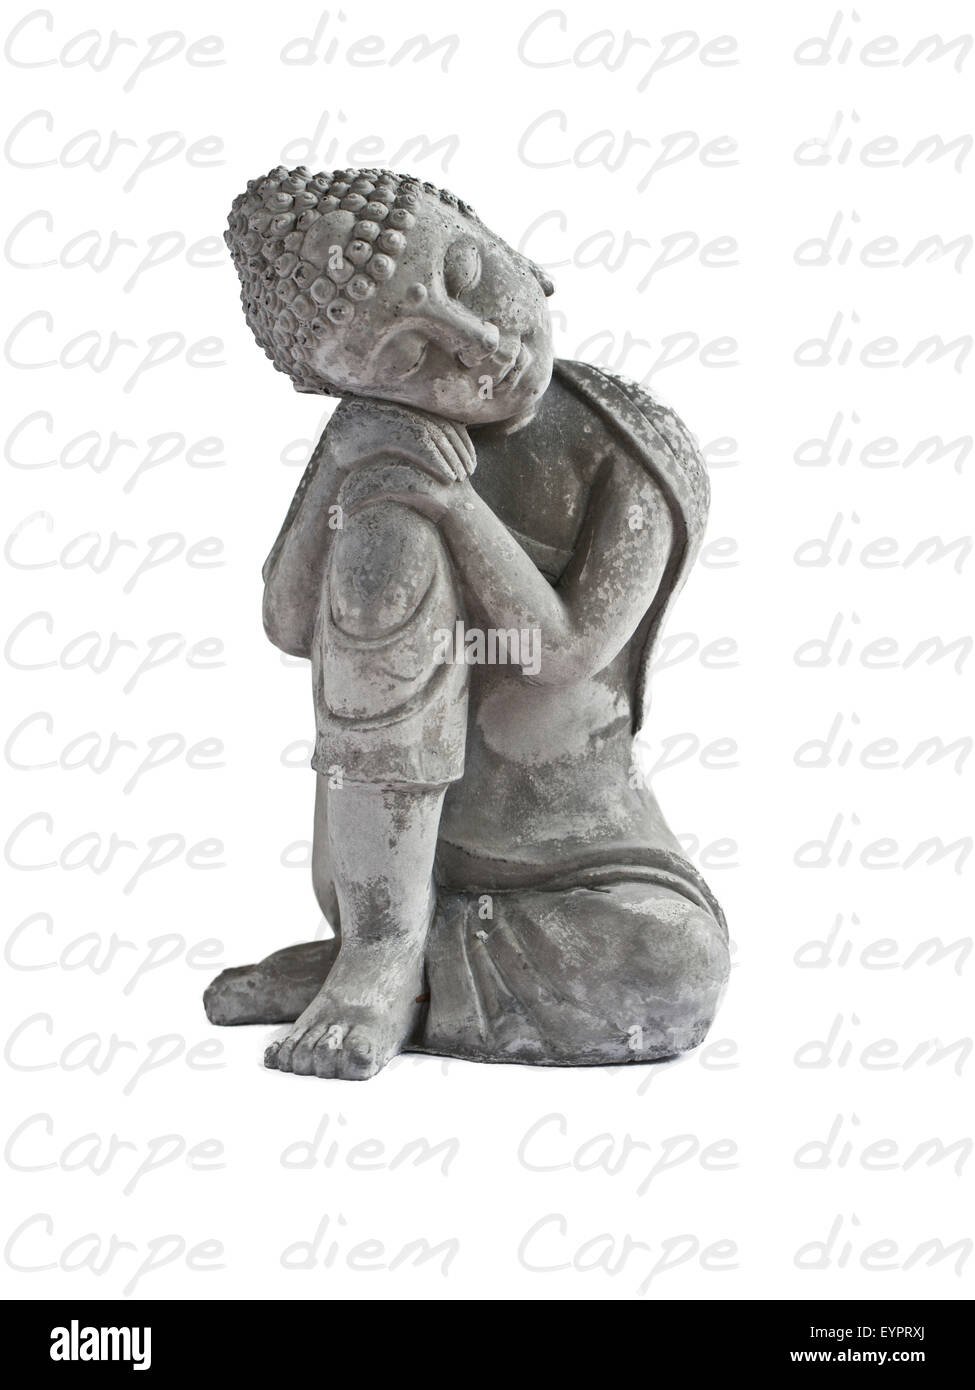 Sleeping Buddha, "Carpe Diem", Foto Stock